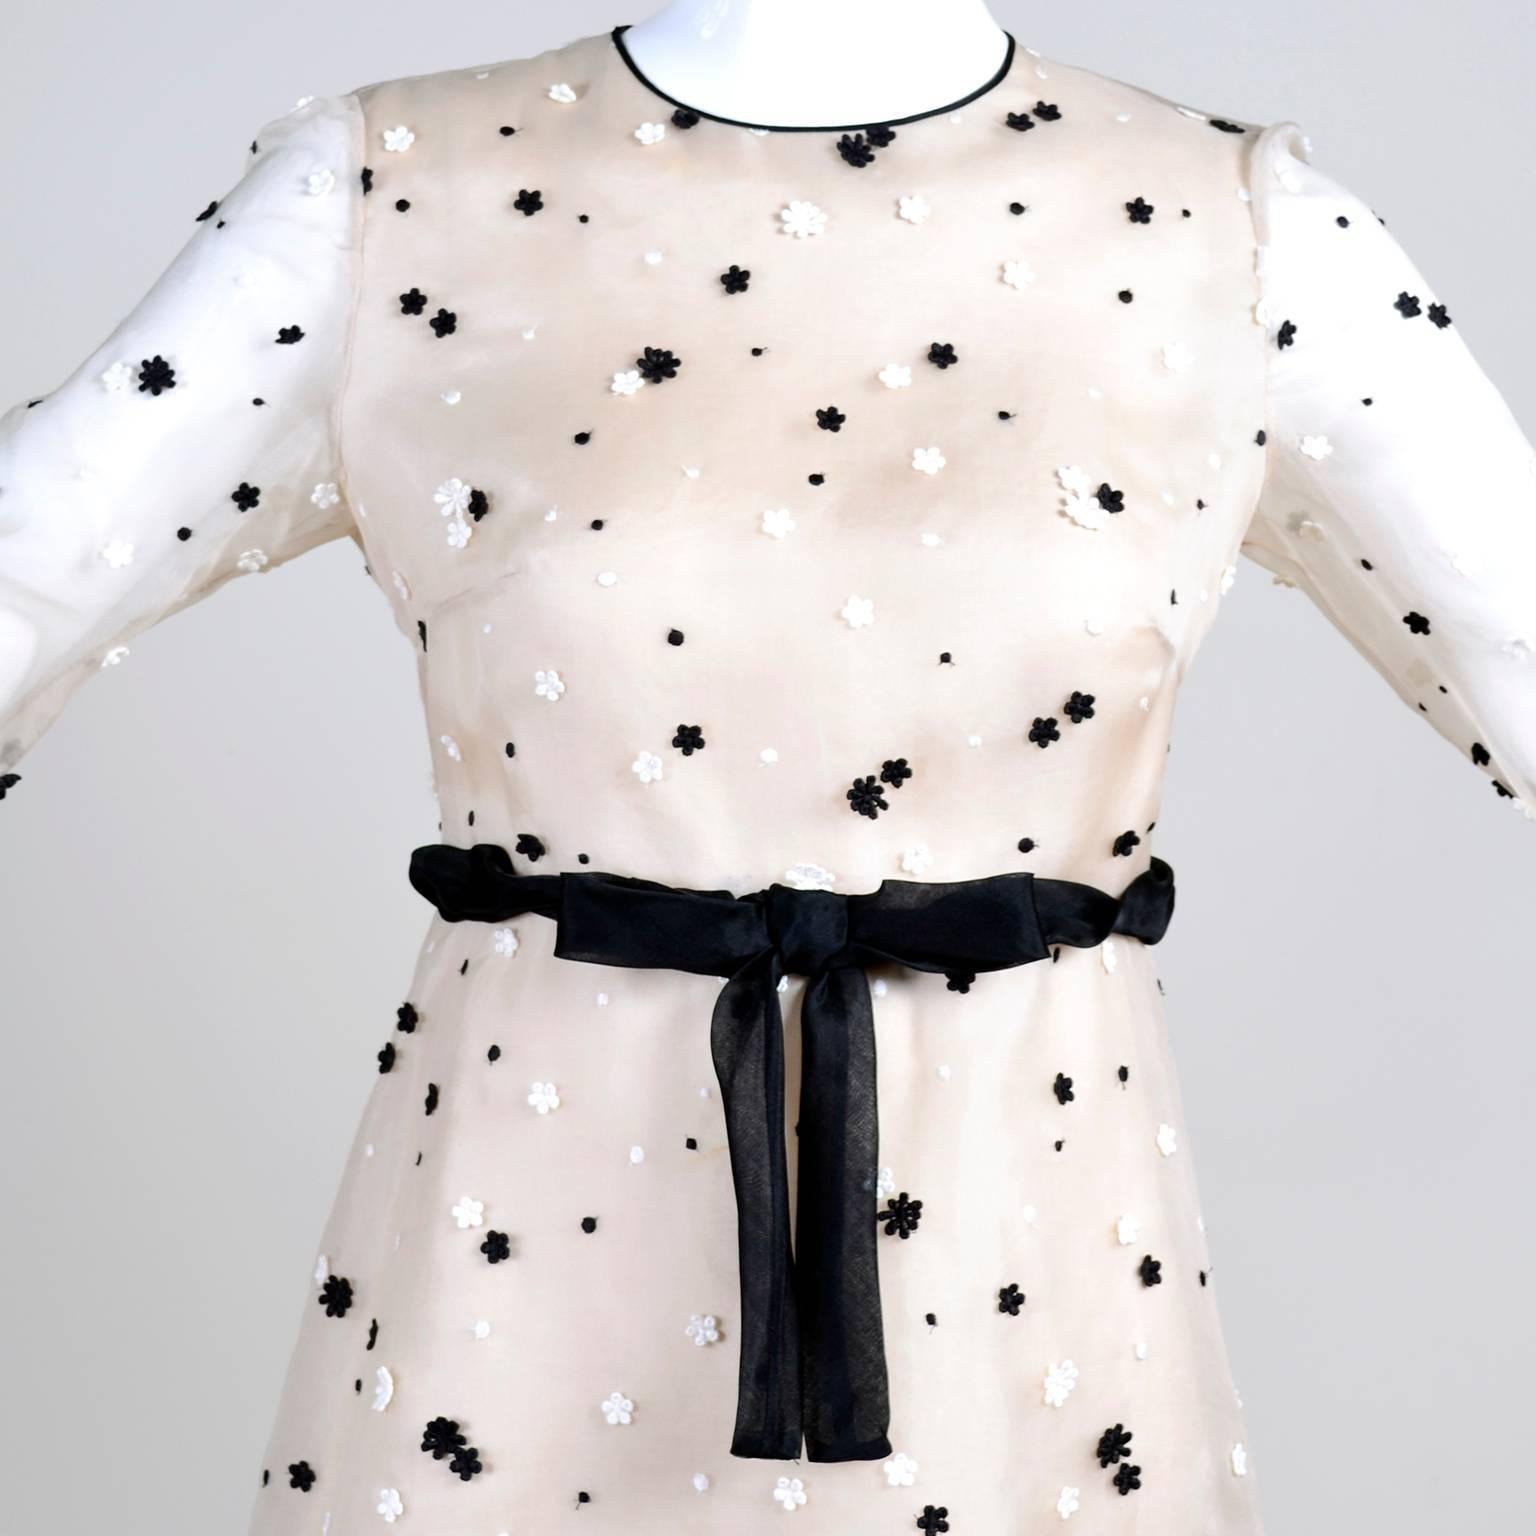 Women's Documented 2011 Valentino Dress in Cream Organza w Black & White Flowers